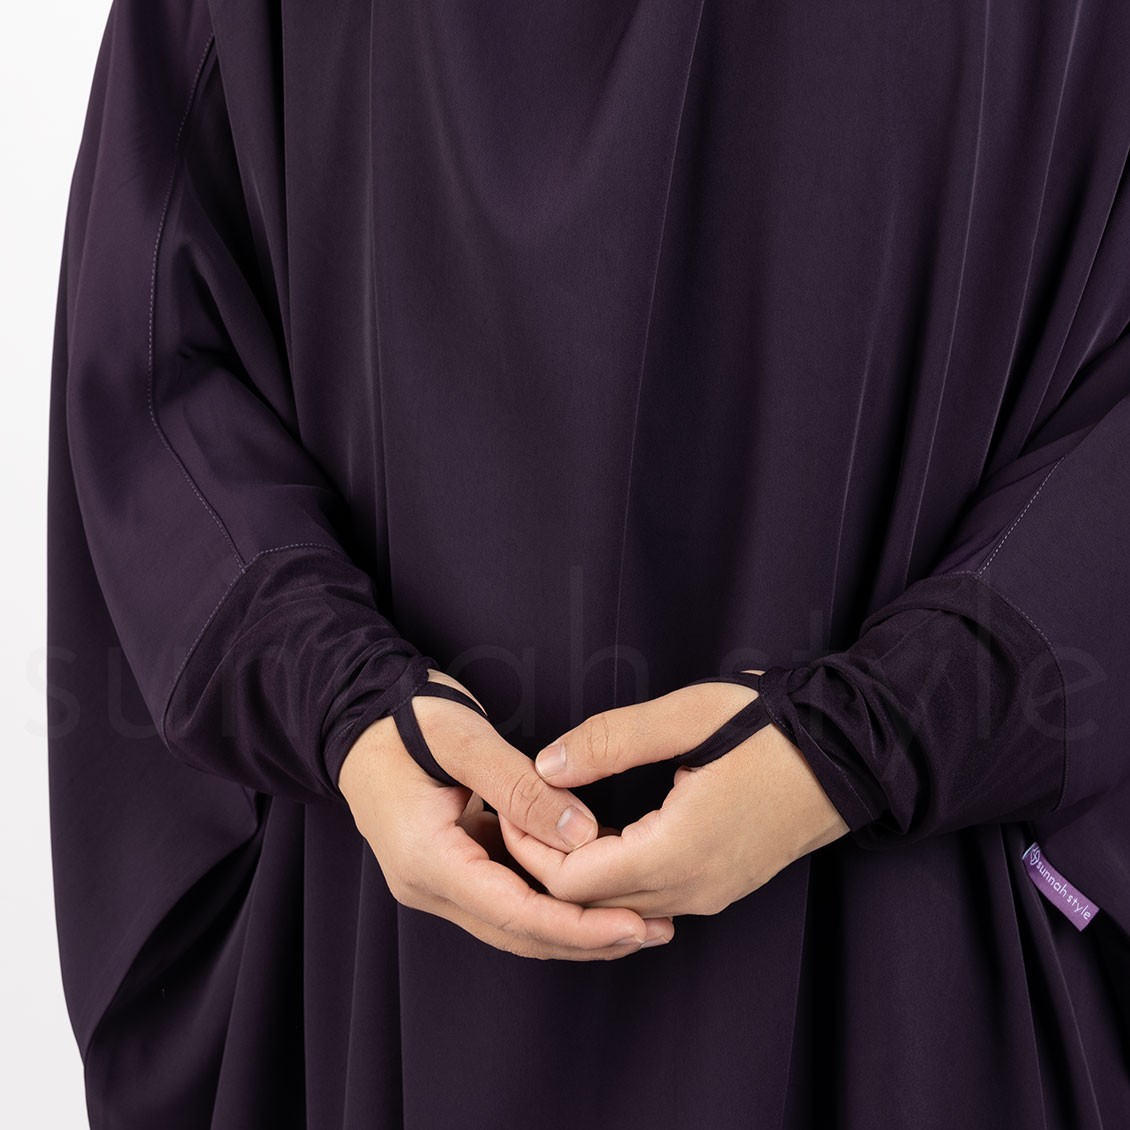 Sunnah Style Signature Jilbab Top Knee Length Dark Violet